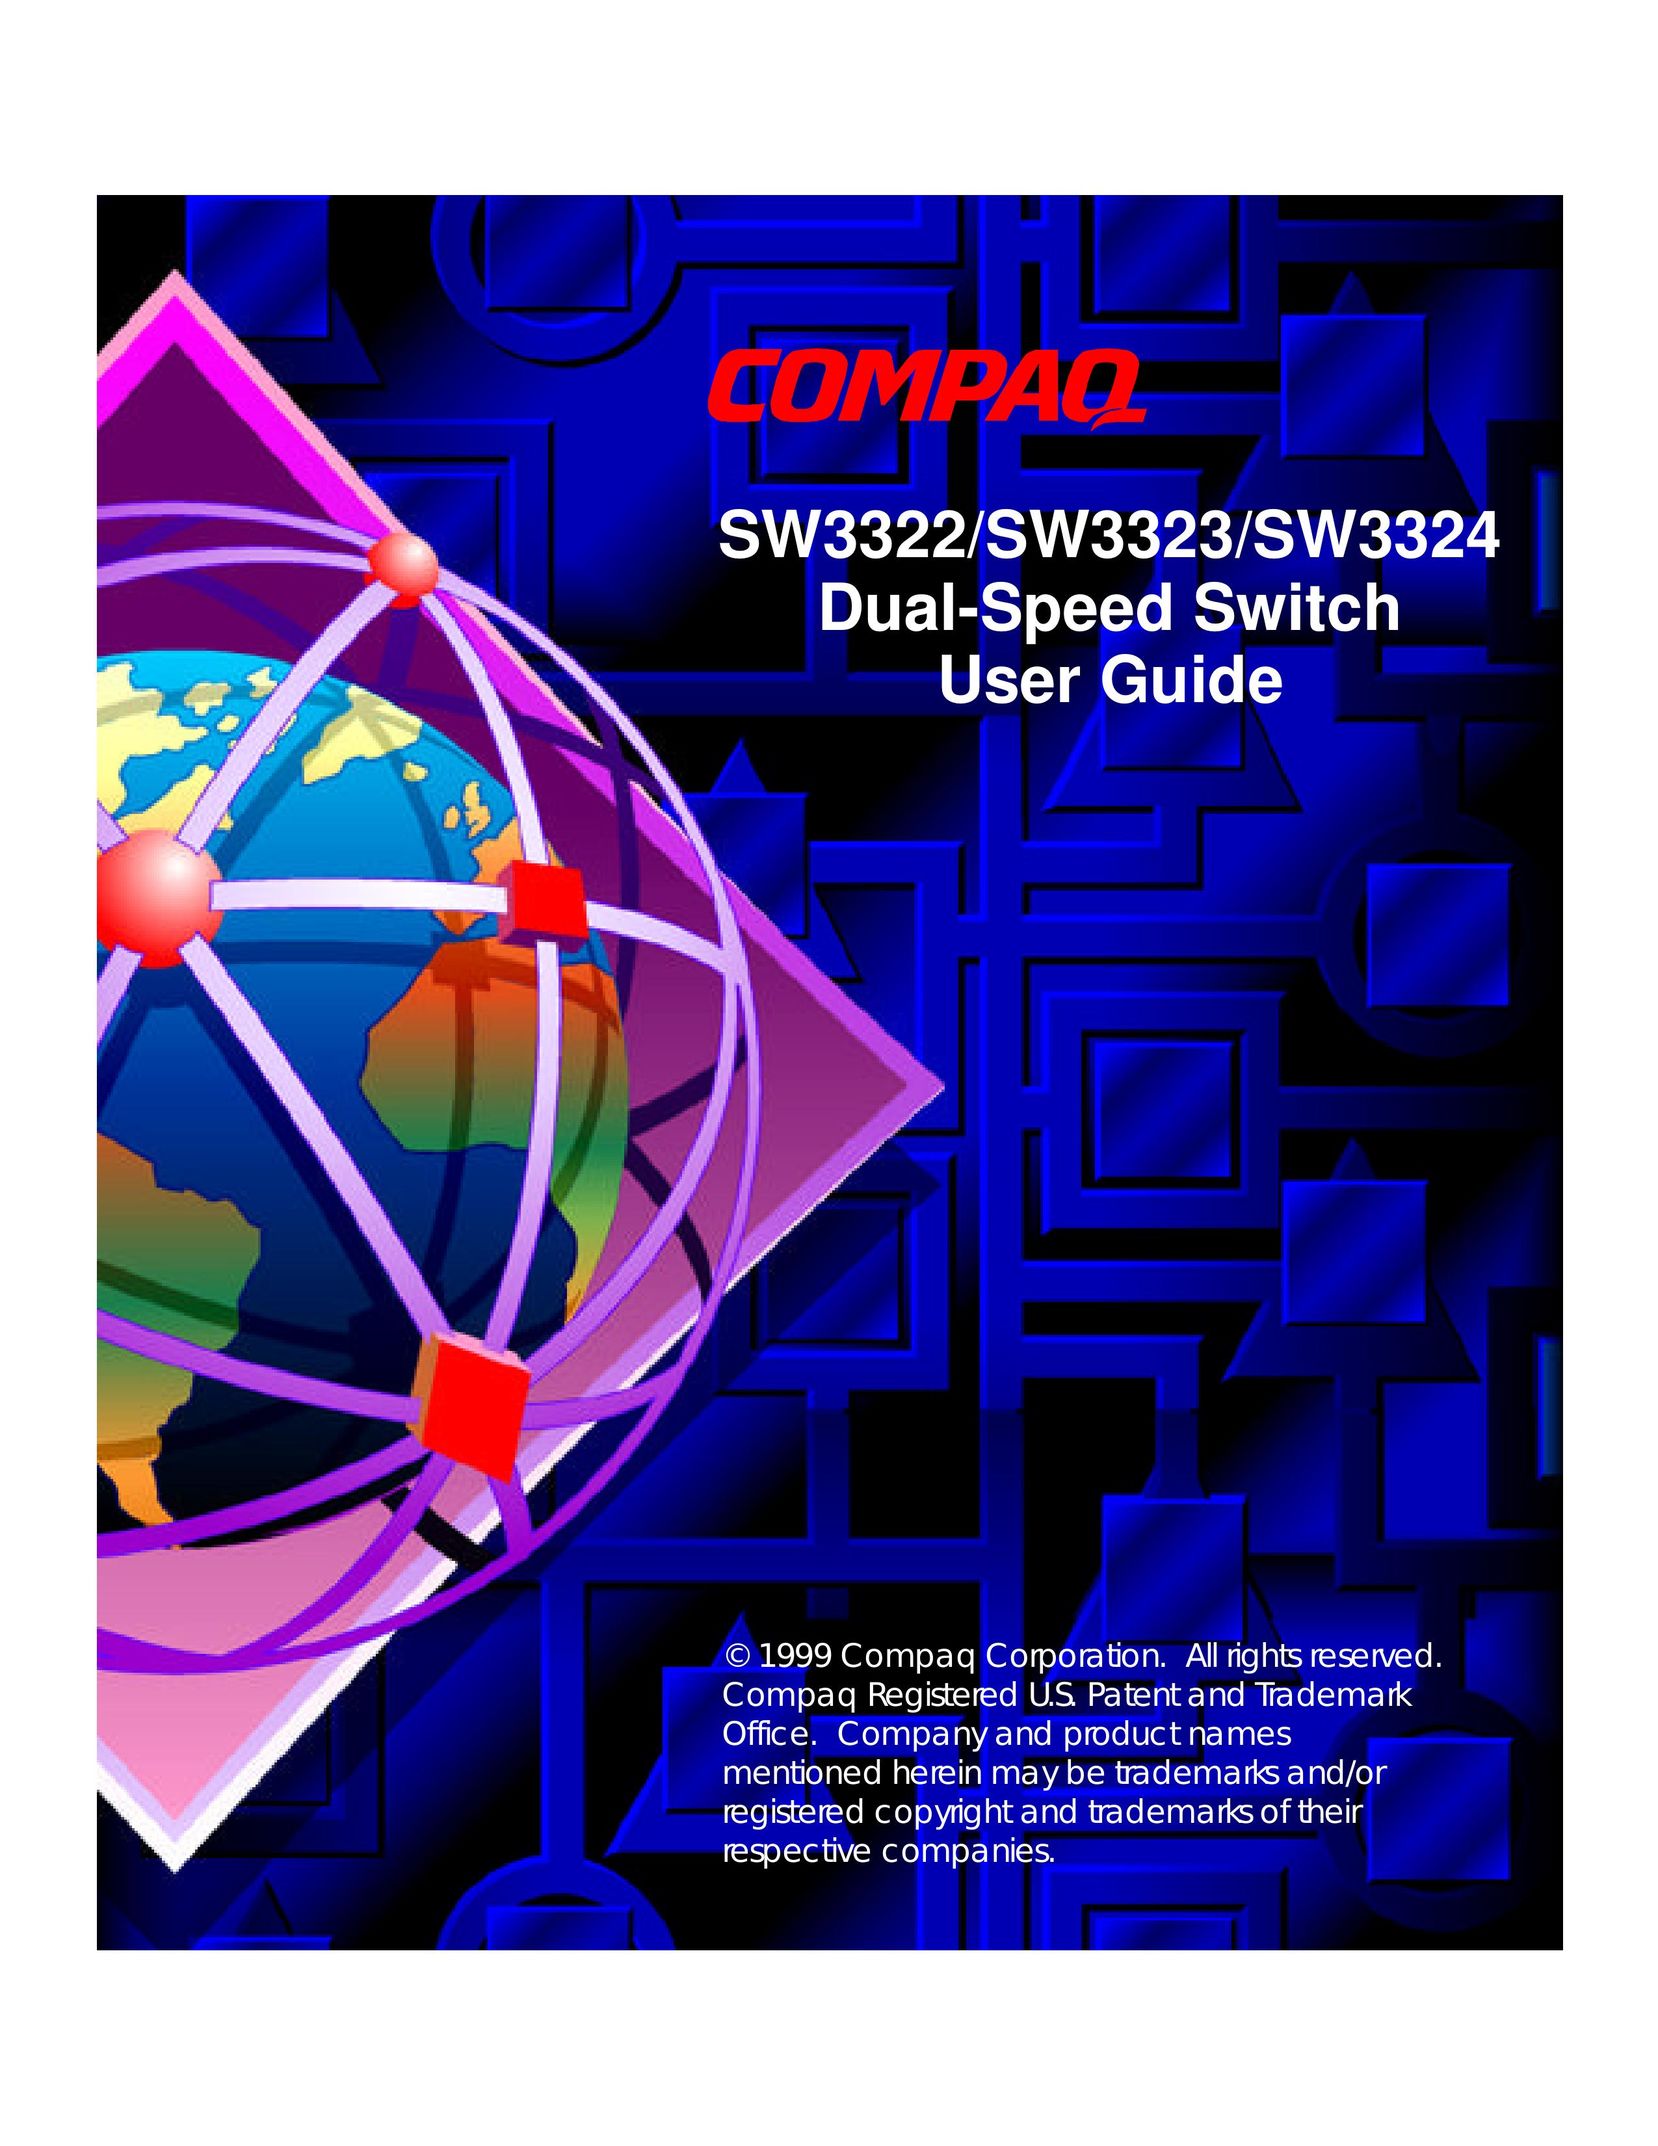 Compaq SW3324 Switch User Manual